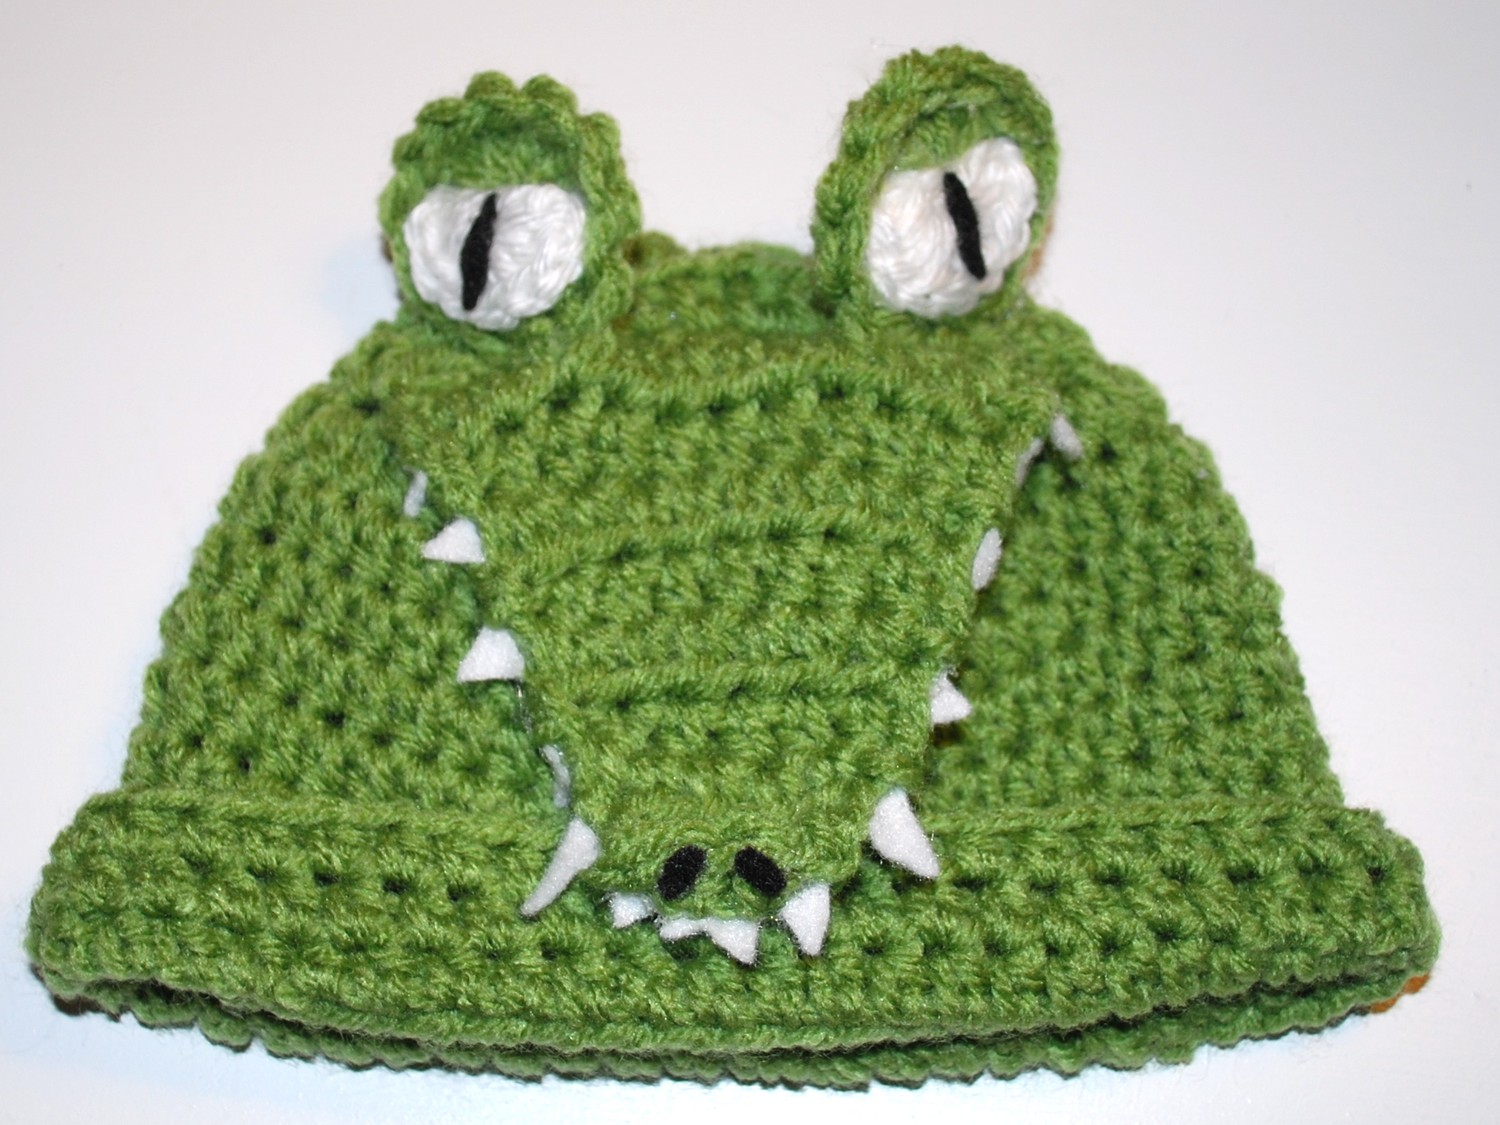 Crochet Alligator Hat Alligator Hat Ba Ideas Pinterest Crochet Hats Crochet And Hats